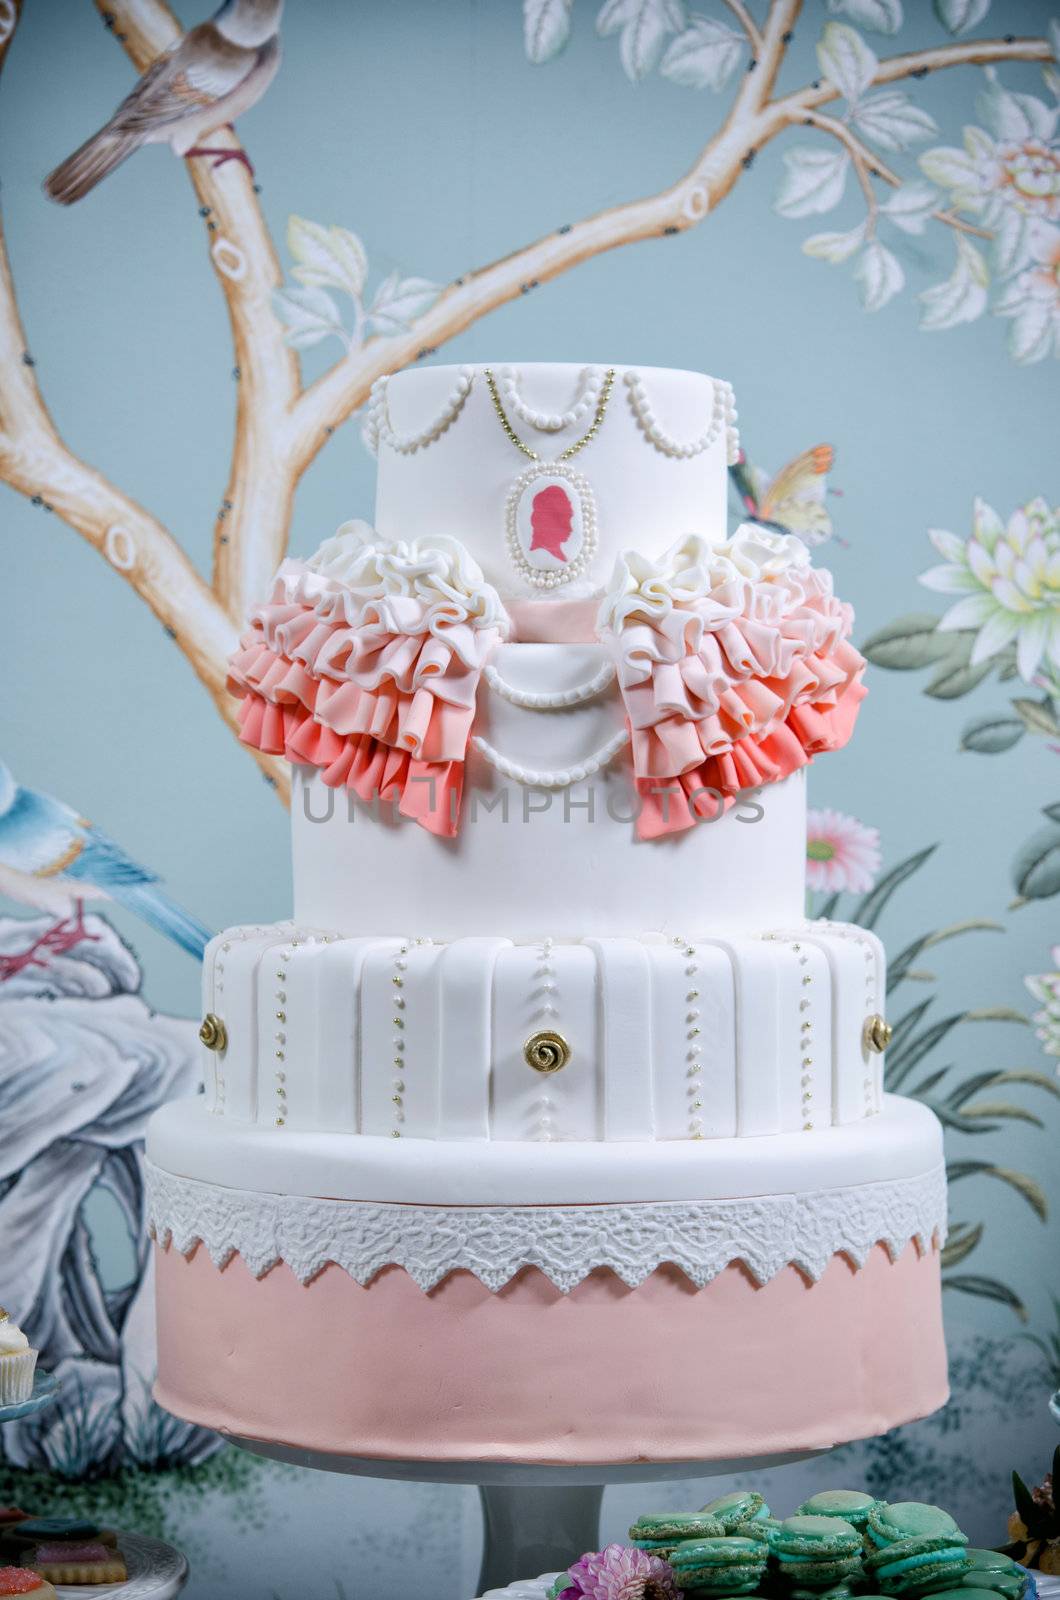 Image of a beautifully decorated wedding cake